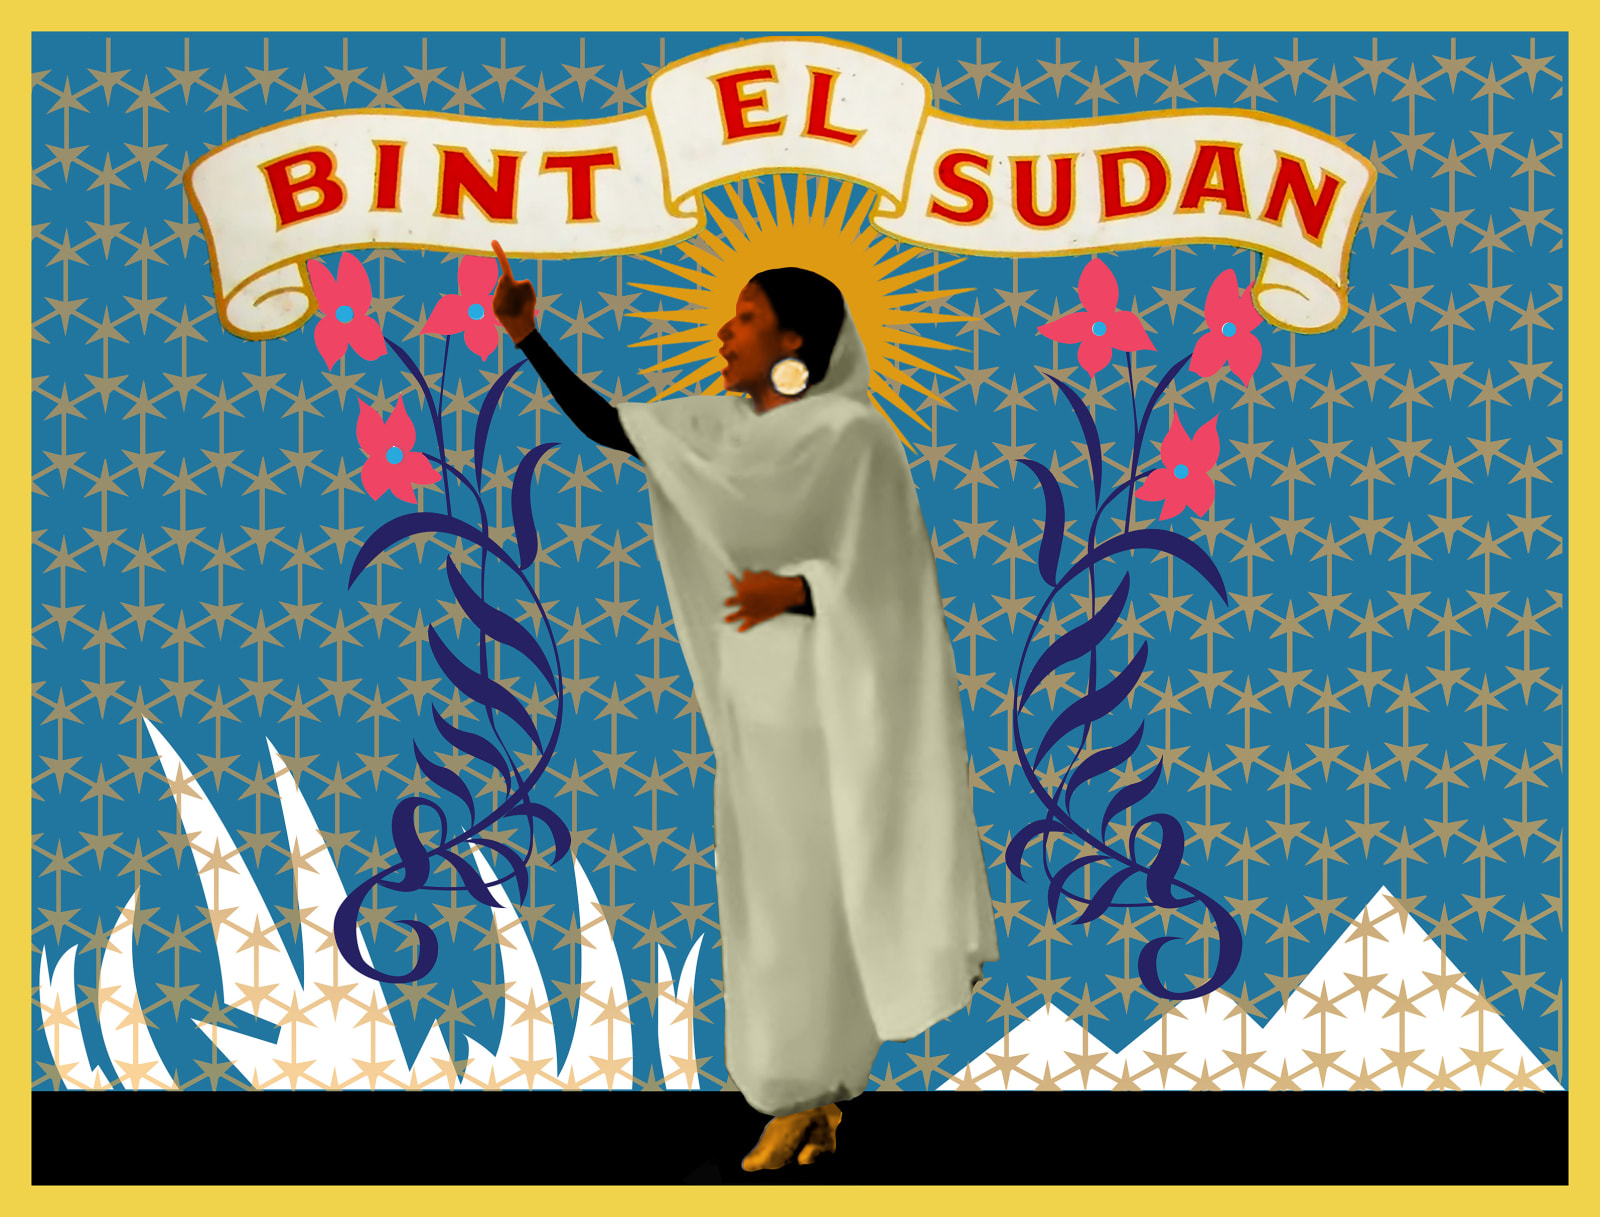 Amado Alfadni, Bint El Sudan - Revolution Label, 2019